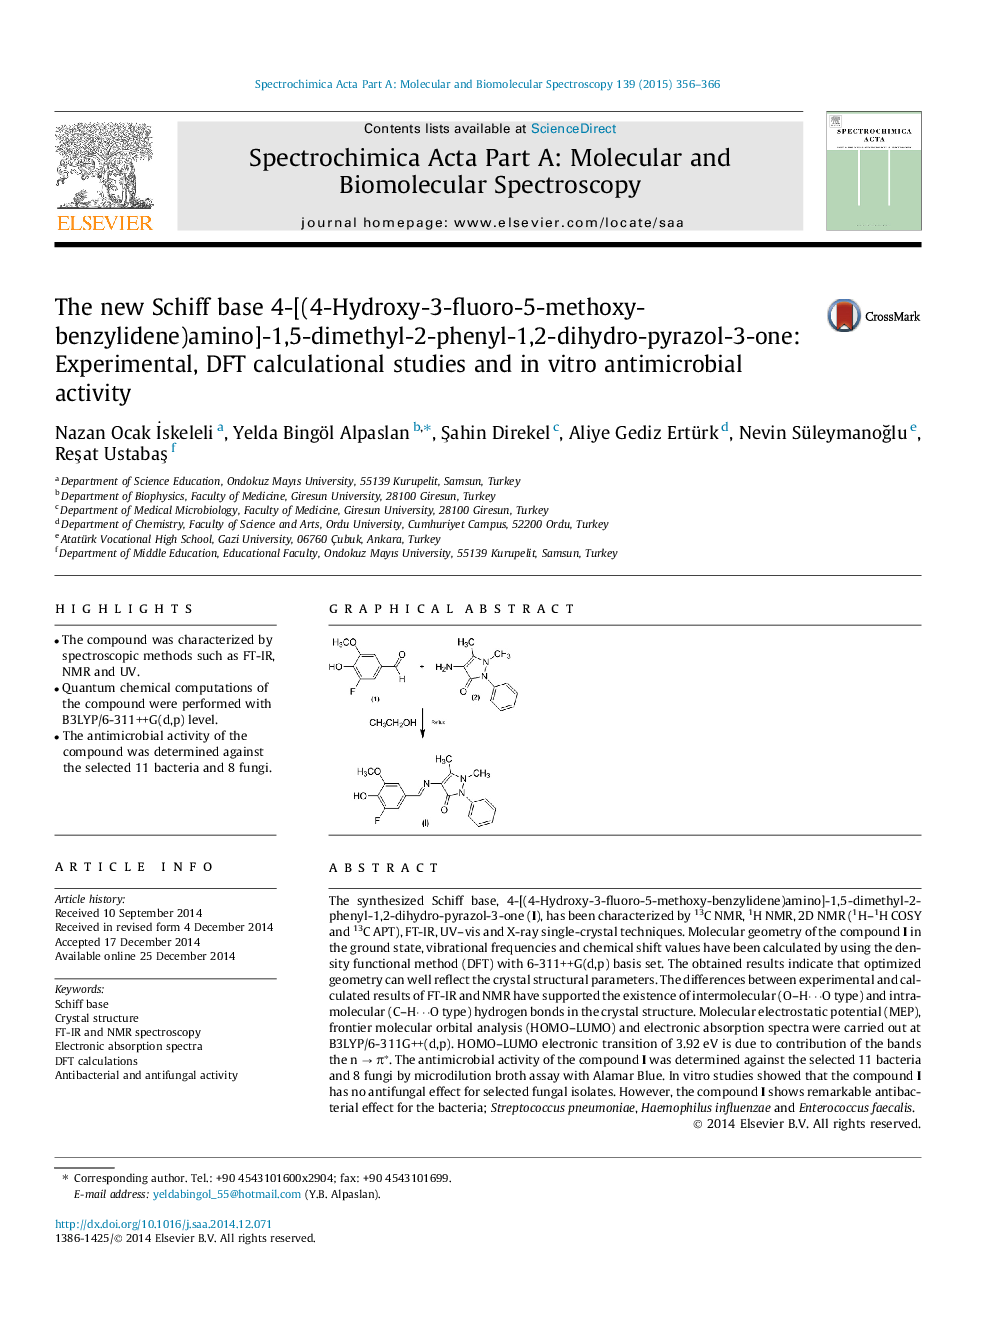 The new Schiff base 4-[(4-Hydroxy-3-fluoro-5-methoxy-benzylidene)amino]-1,5-dimethyl-2-phenyl-1,2-dihydro-pyrazol-3-one: Experimental, DFT calculational studies and in vitro antimicrobial activity